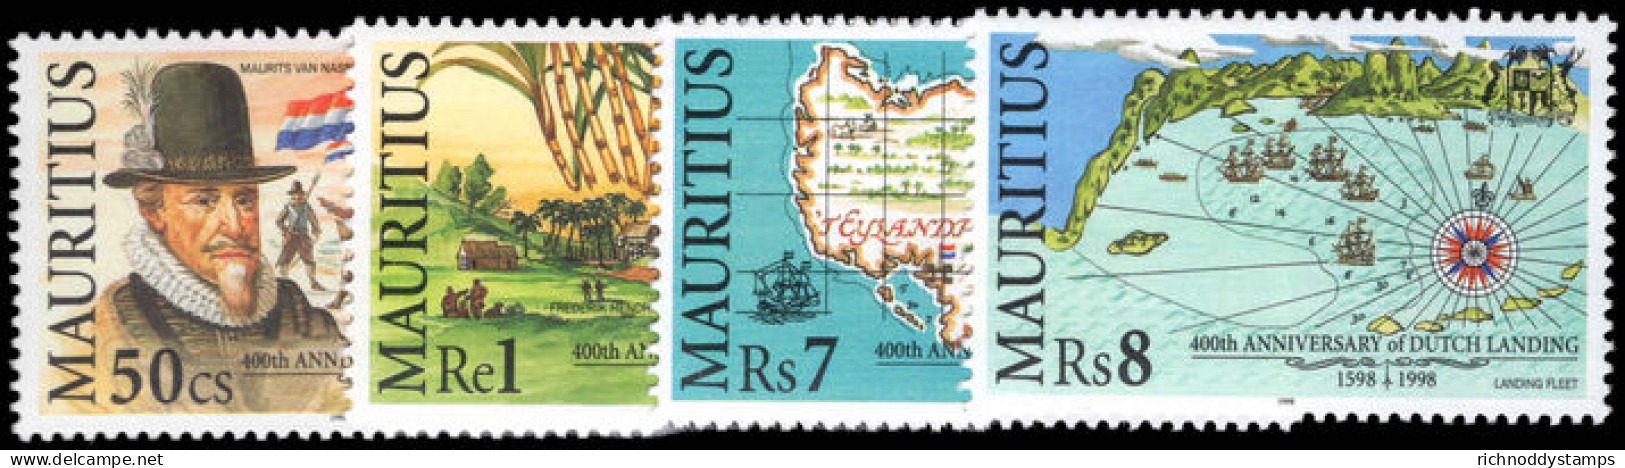 Mauritius 1998 40th Anniv Of Dutch Landing On Mauritius Unmounted Mint. - Maurice (1968-...)